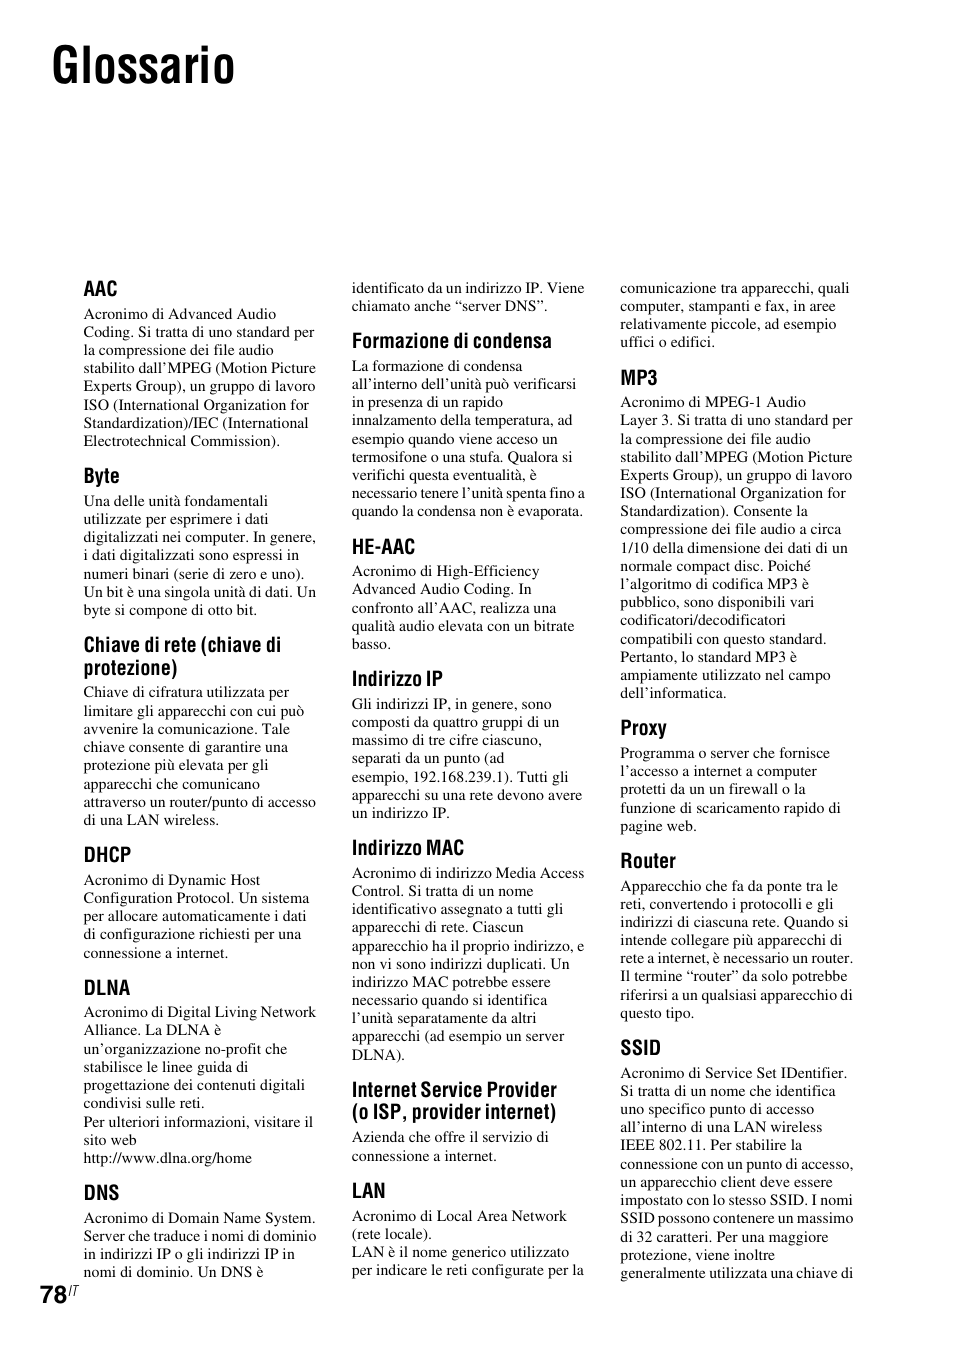 Glossario | Sony NAS-SV20DI Manuale d'uso | Pagina 78 / 107